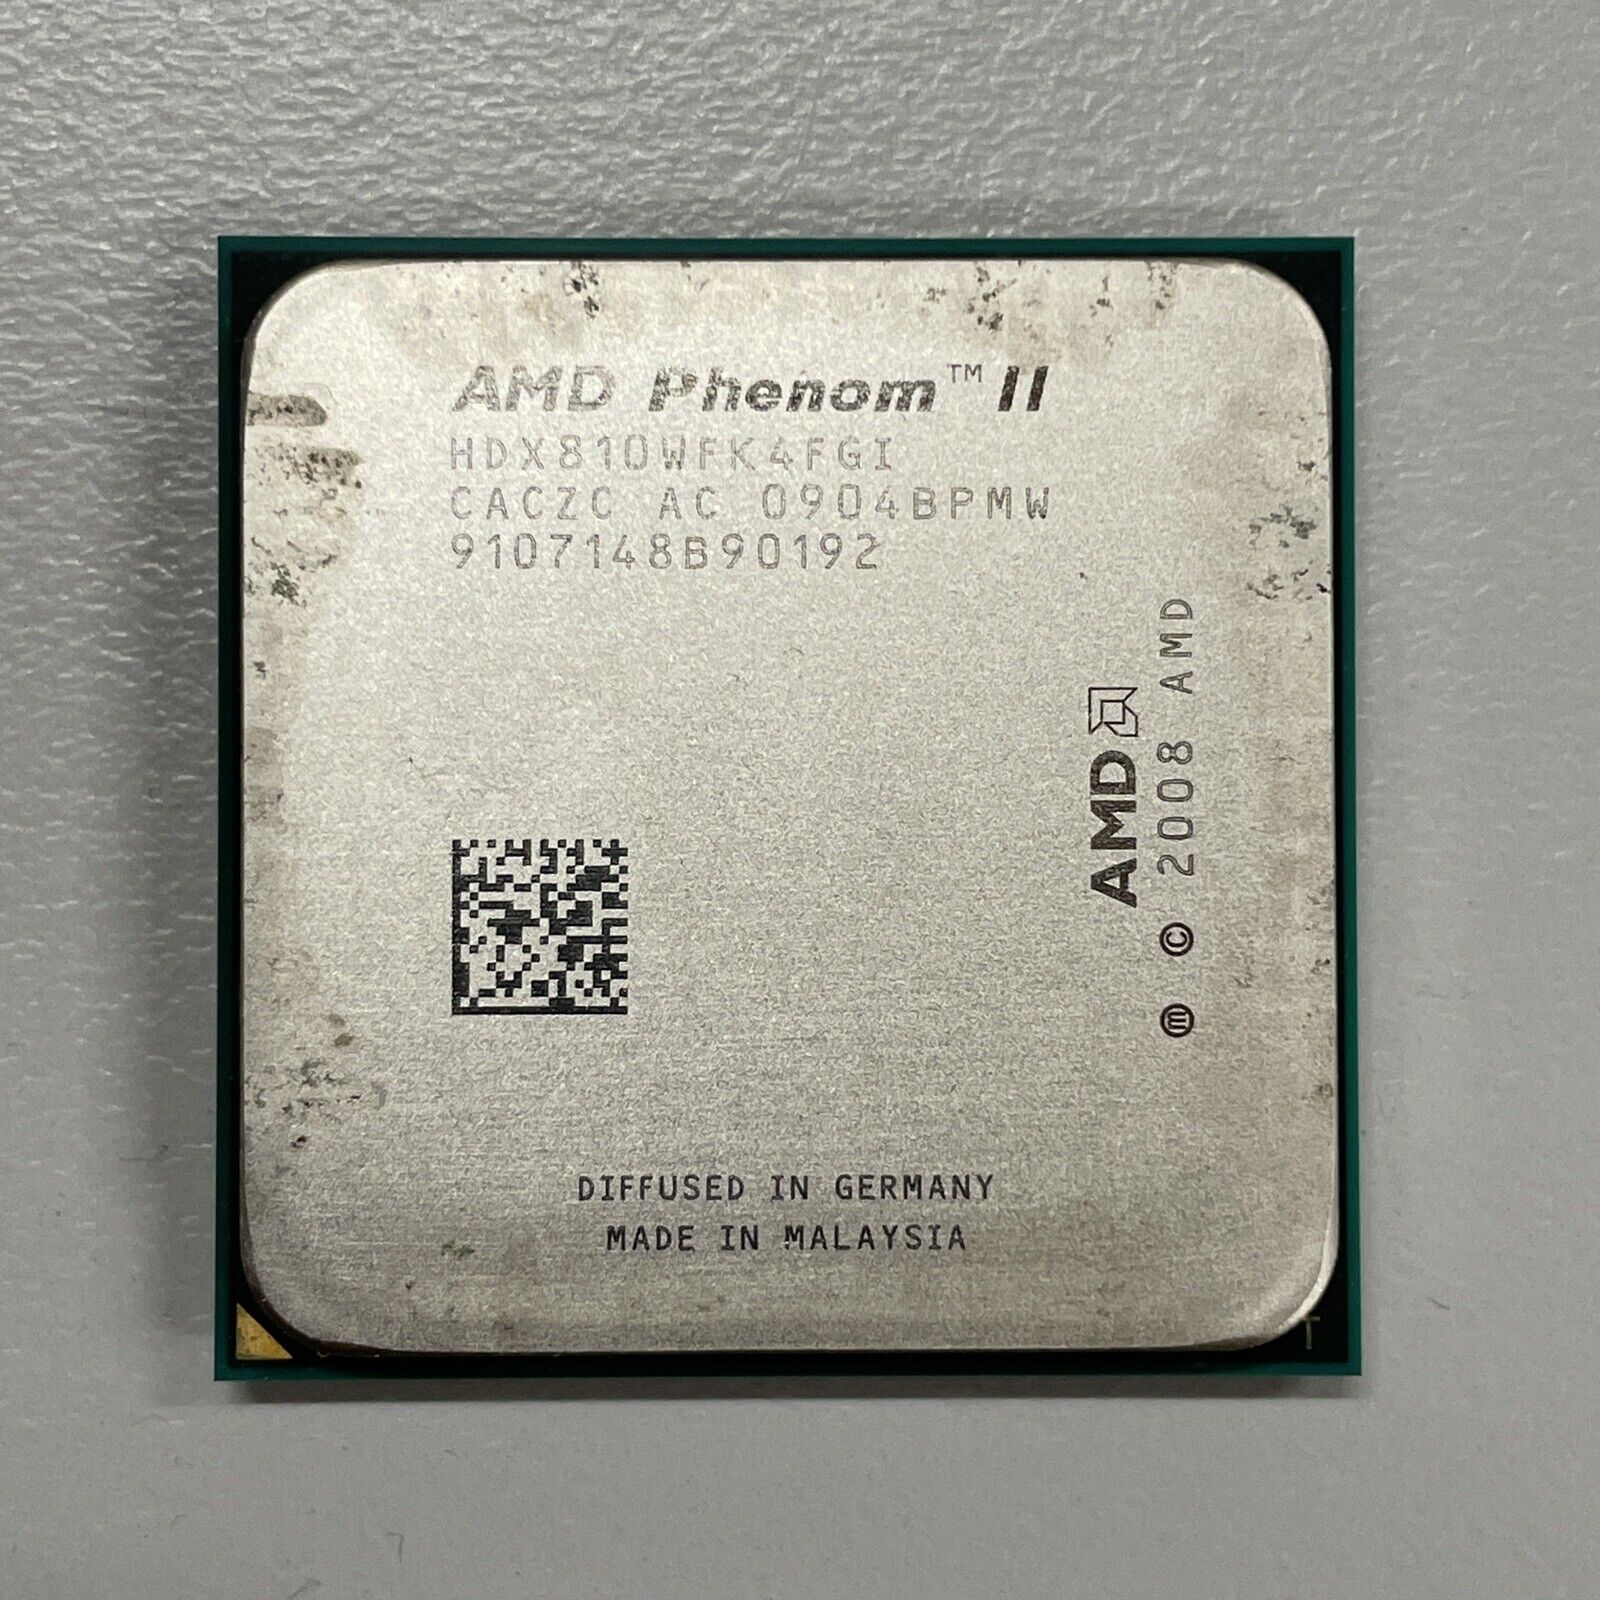 AMD Phenom II X4 810 CPU 2.60 GHz 667 MHz Socket AM2+ AM3 HDX810WFK4FGI